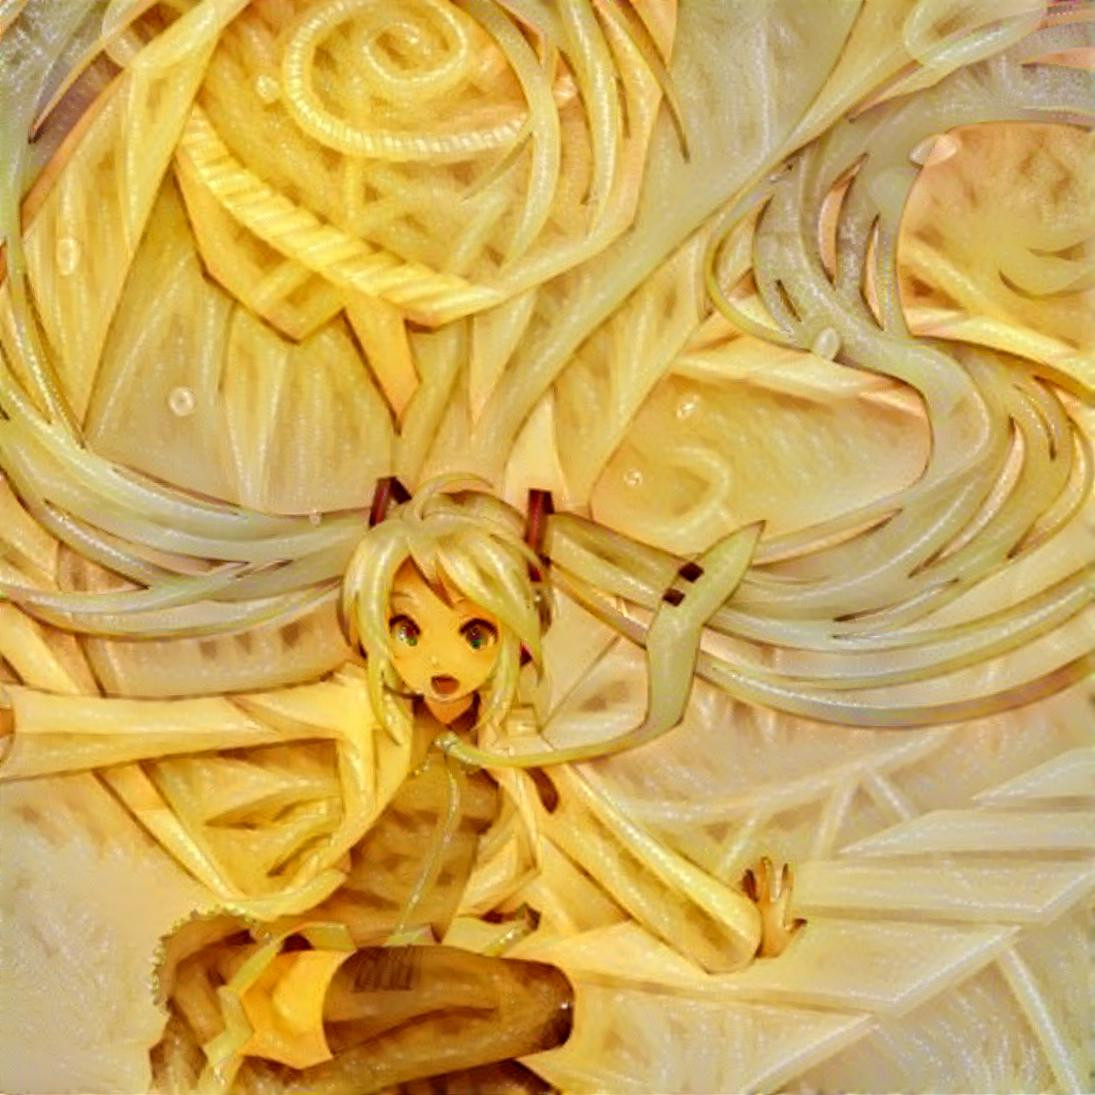 KREA - anime girl eating spaghetti by madonna